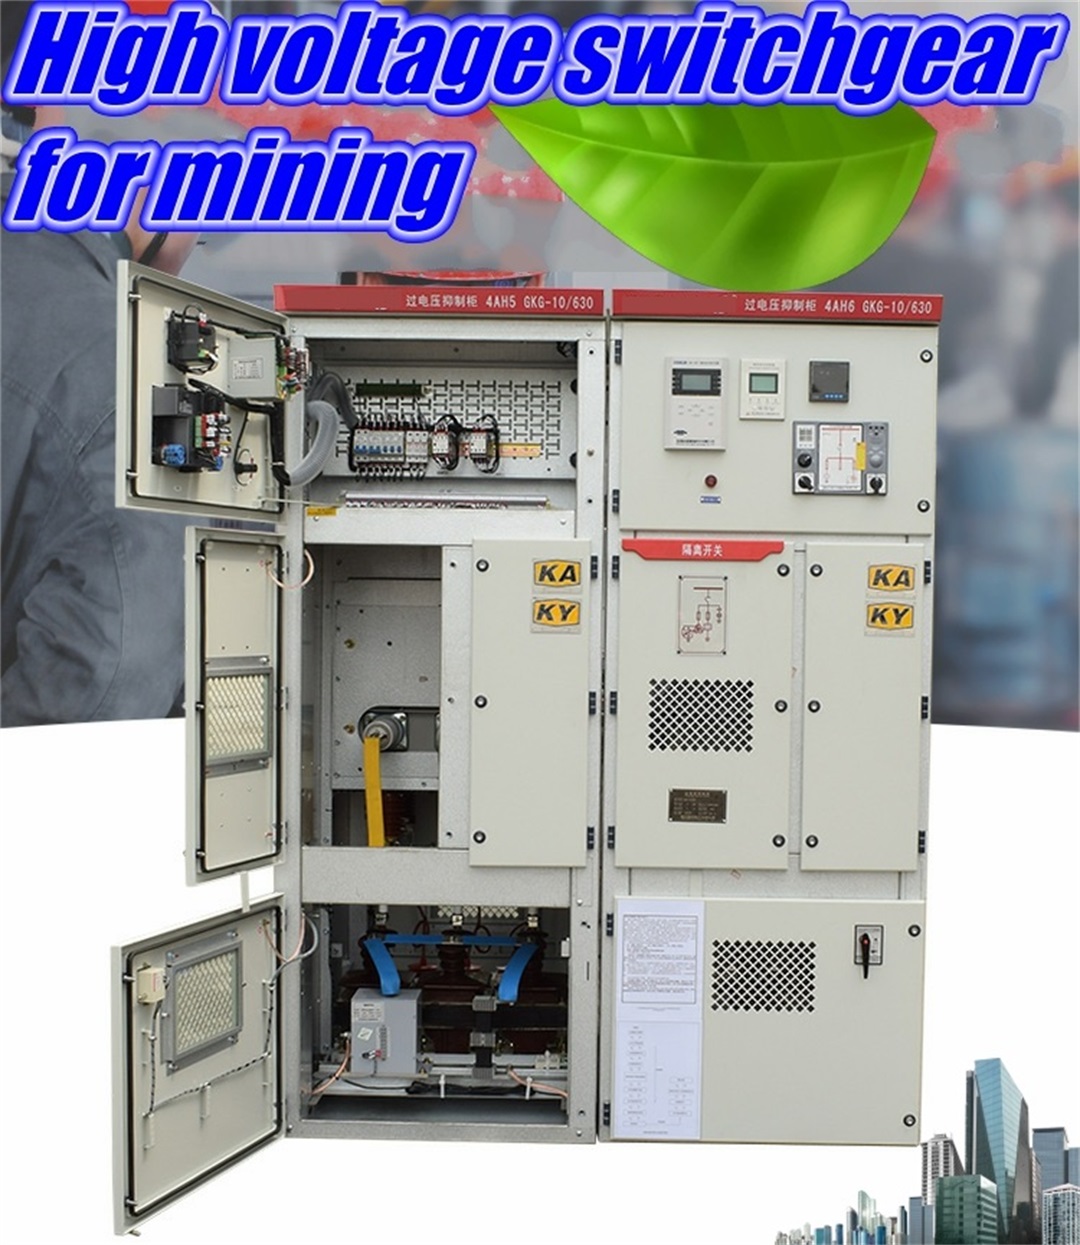 Mining switchgear